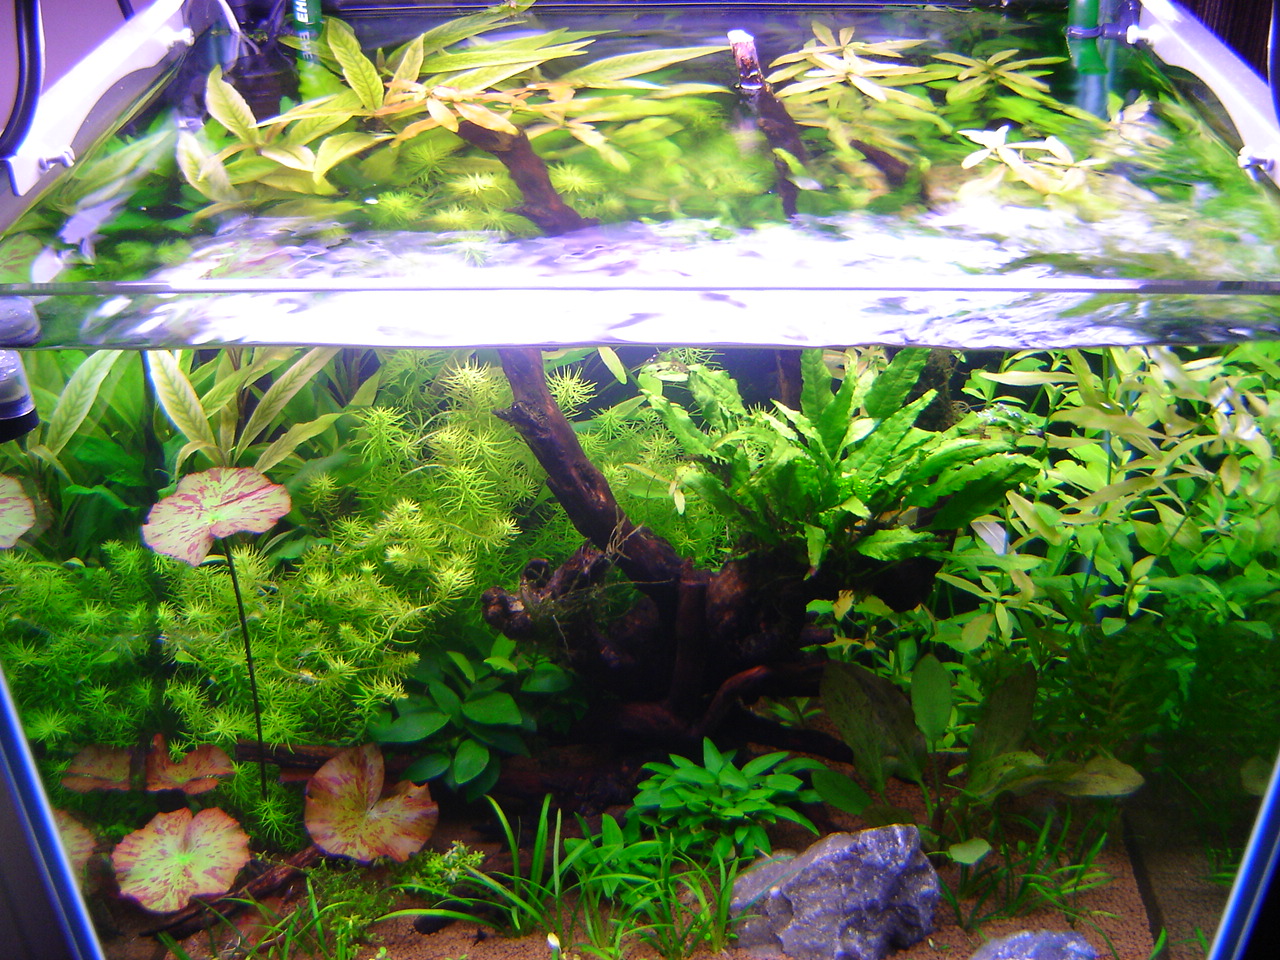 Aquarium Net for Tropical Fish and Planted Aquarium Tank – Glass Aqua